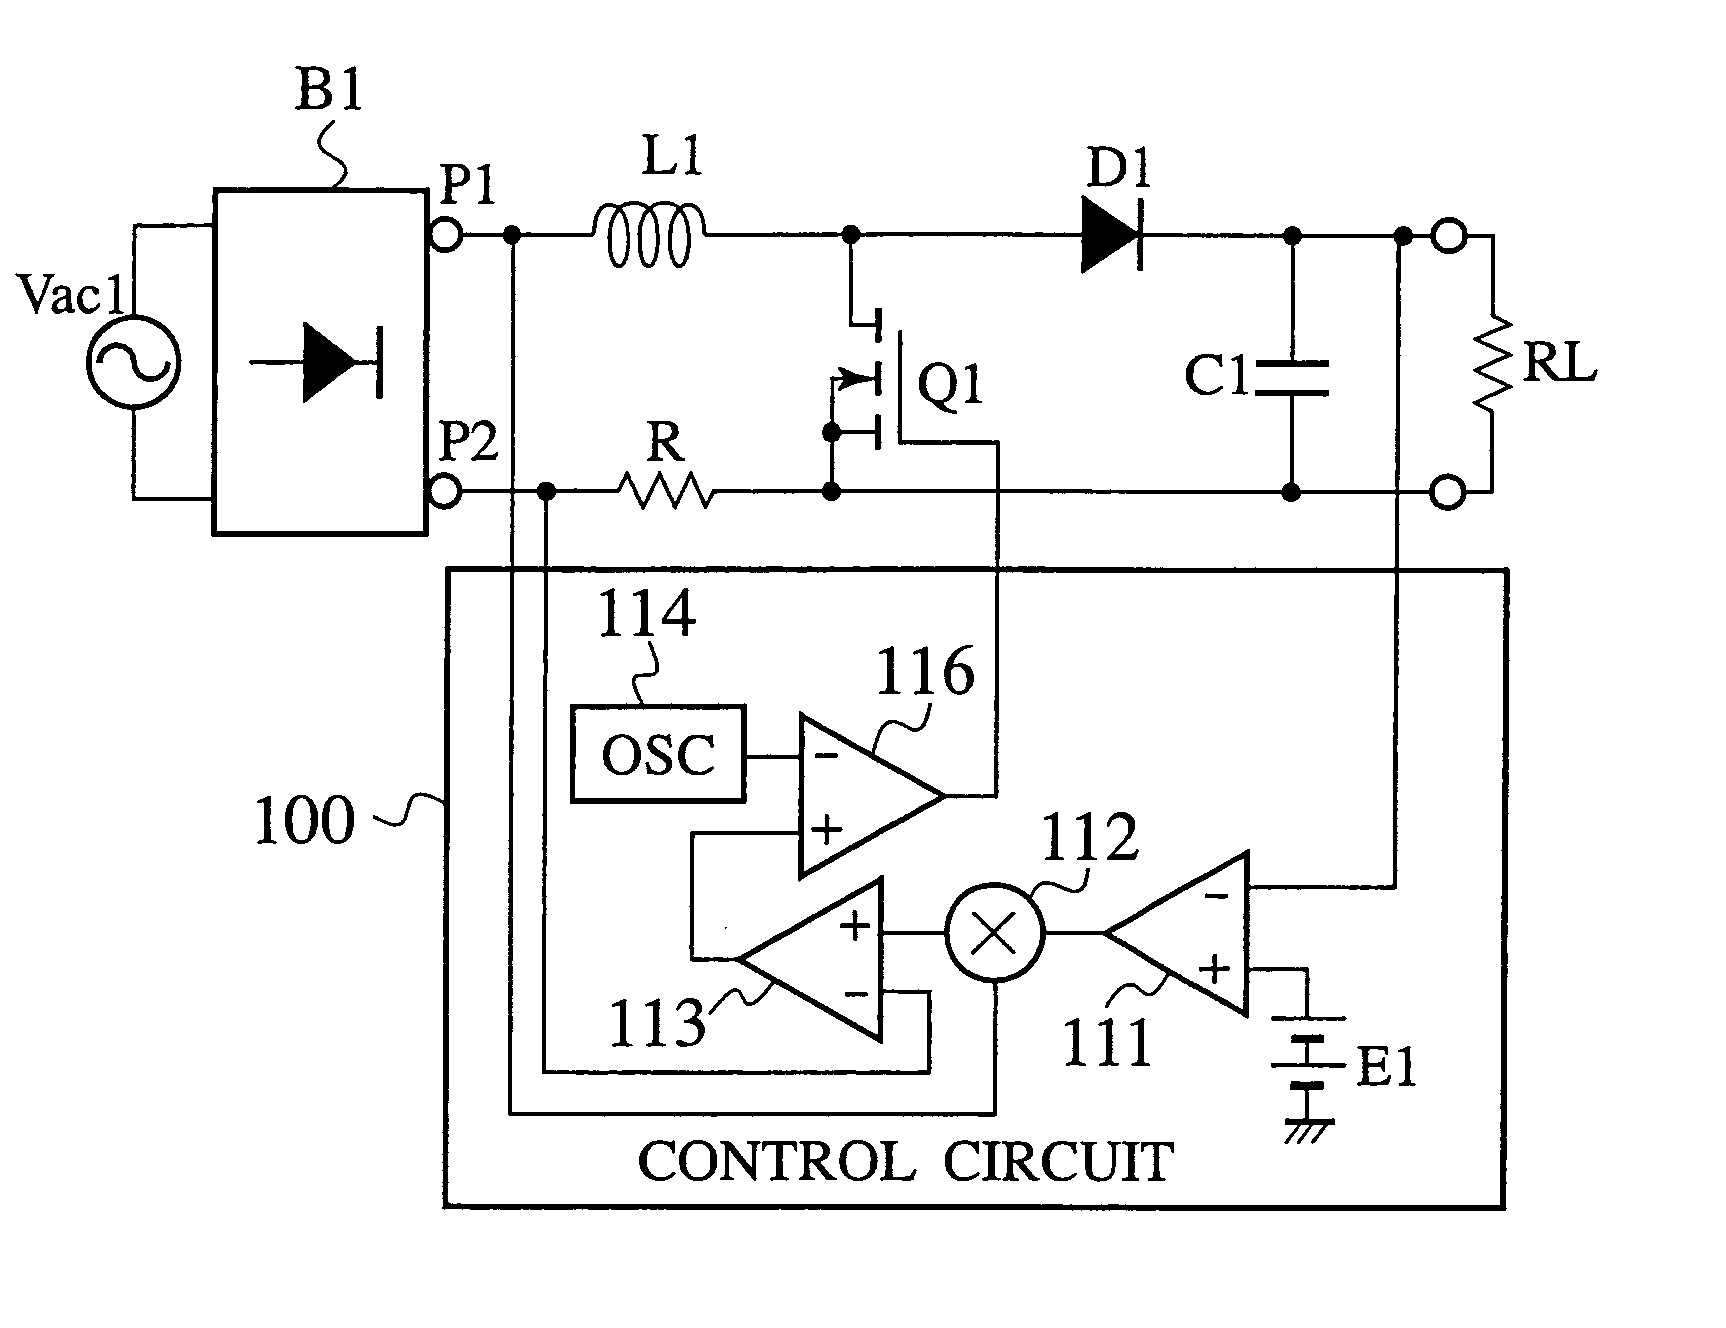 Power factor impoving circuit